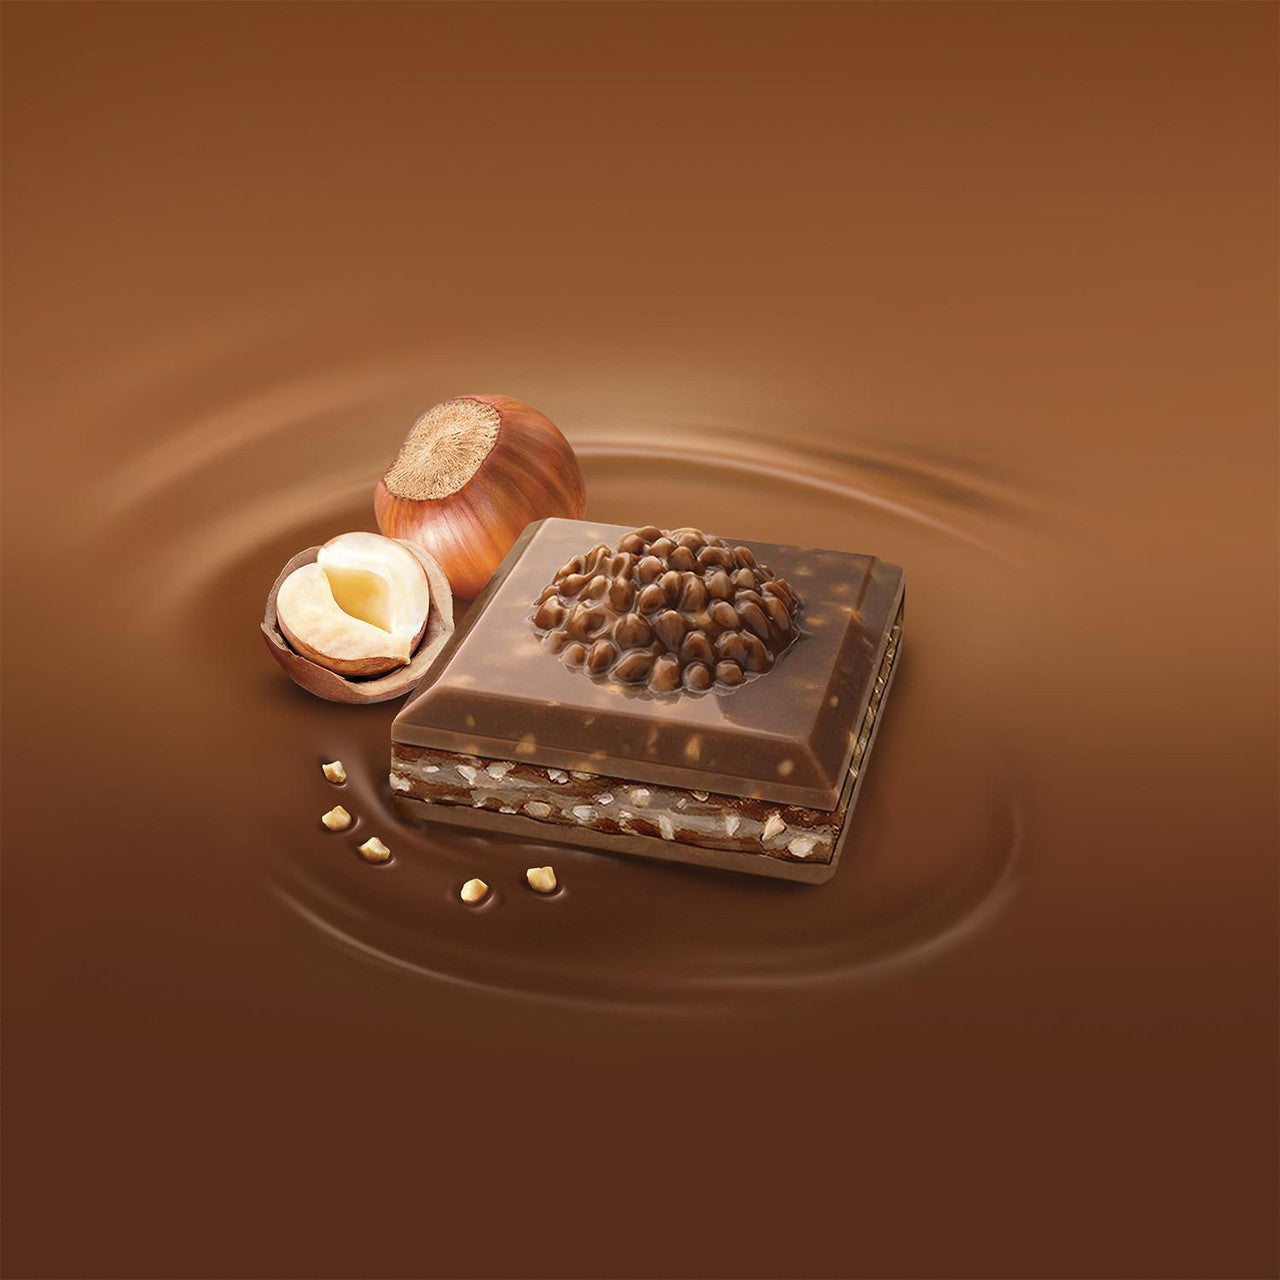 FERRERO ROCHER Premium Gourmet Milk Chocolate Hazelnut Candy